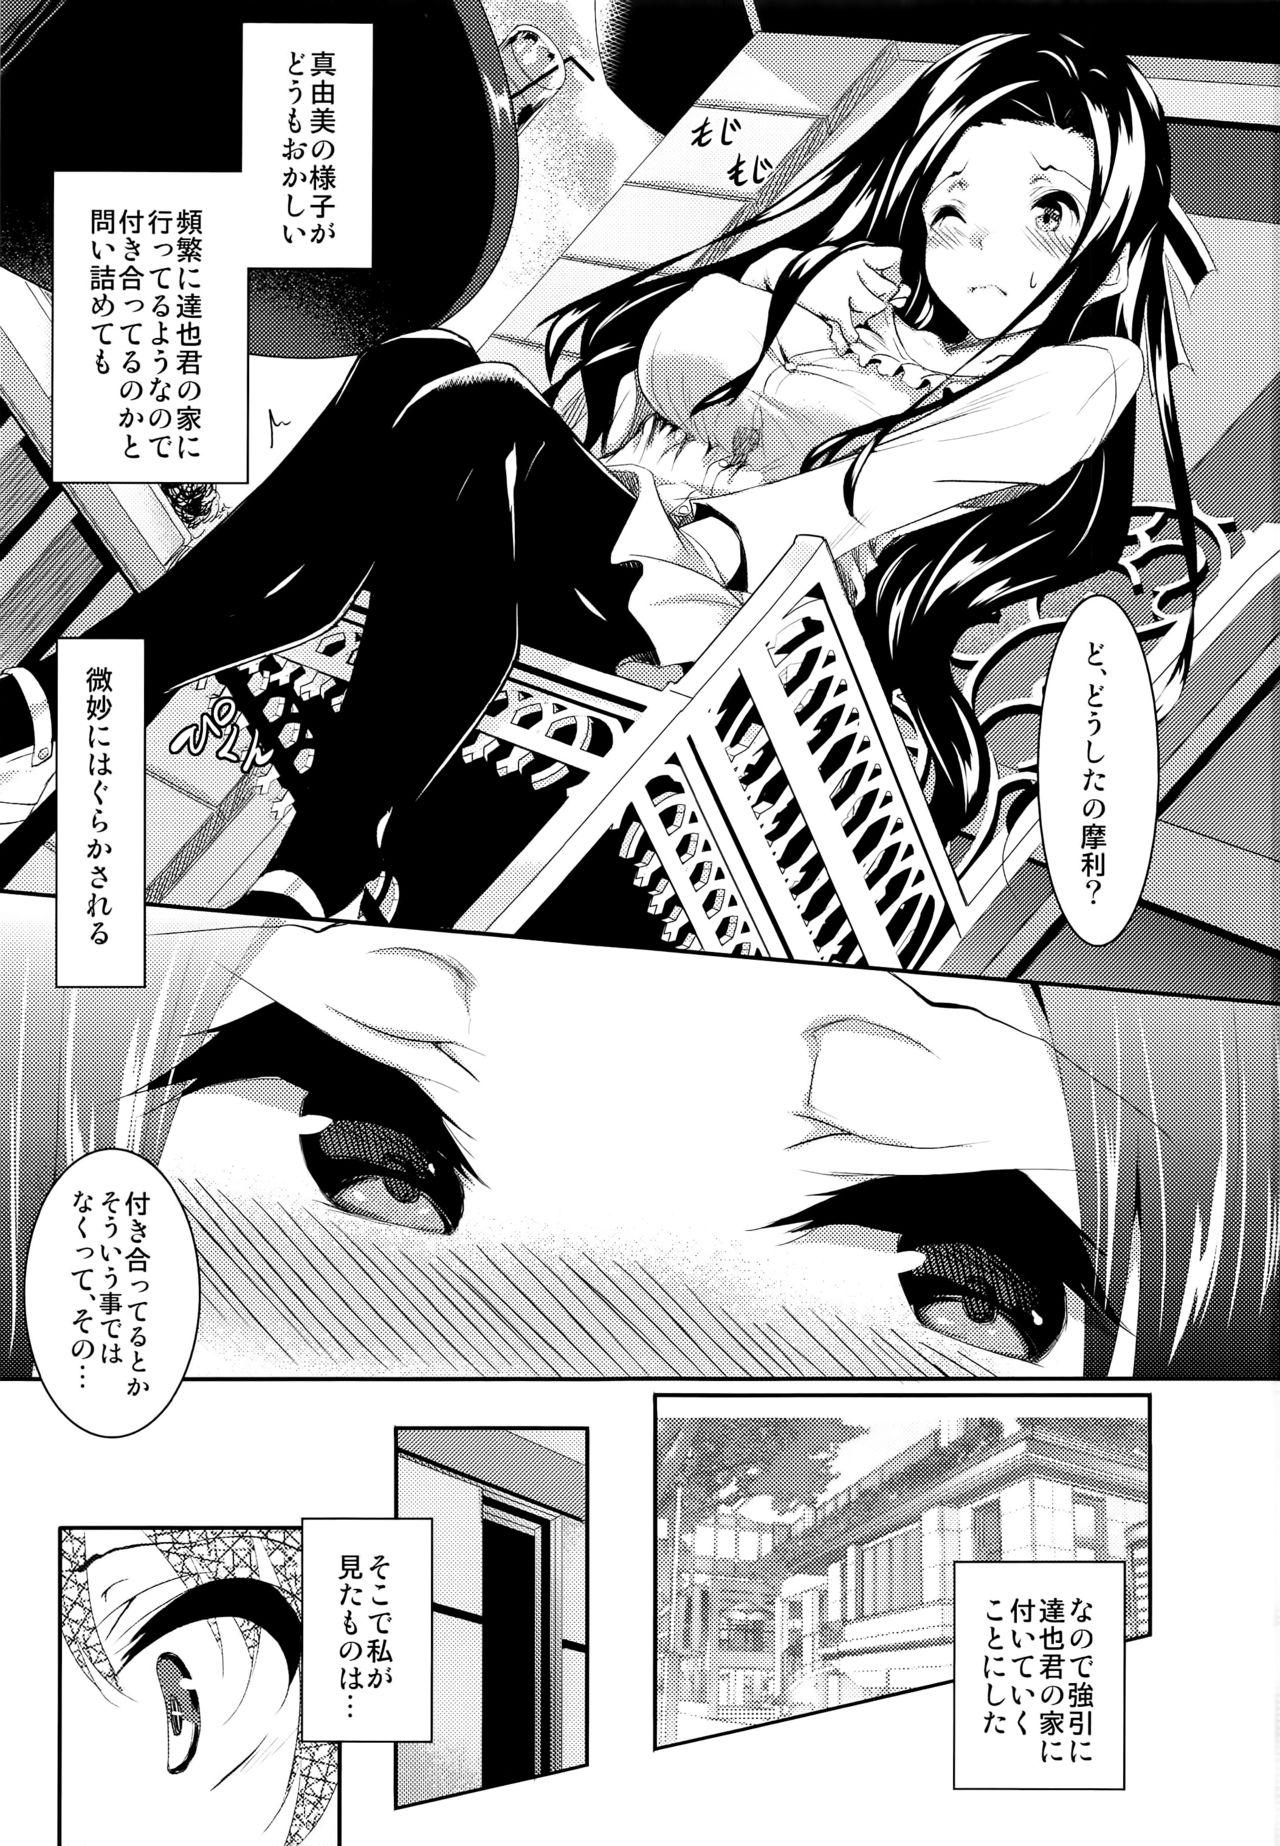 Amante Sasuoni! 4 - Mahouka koukou no rettousei Uniform - Page 3